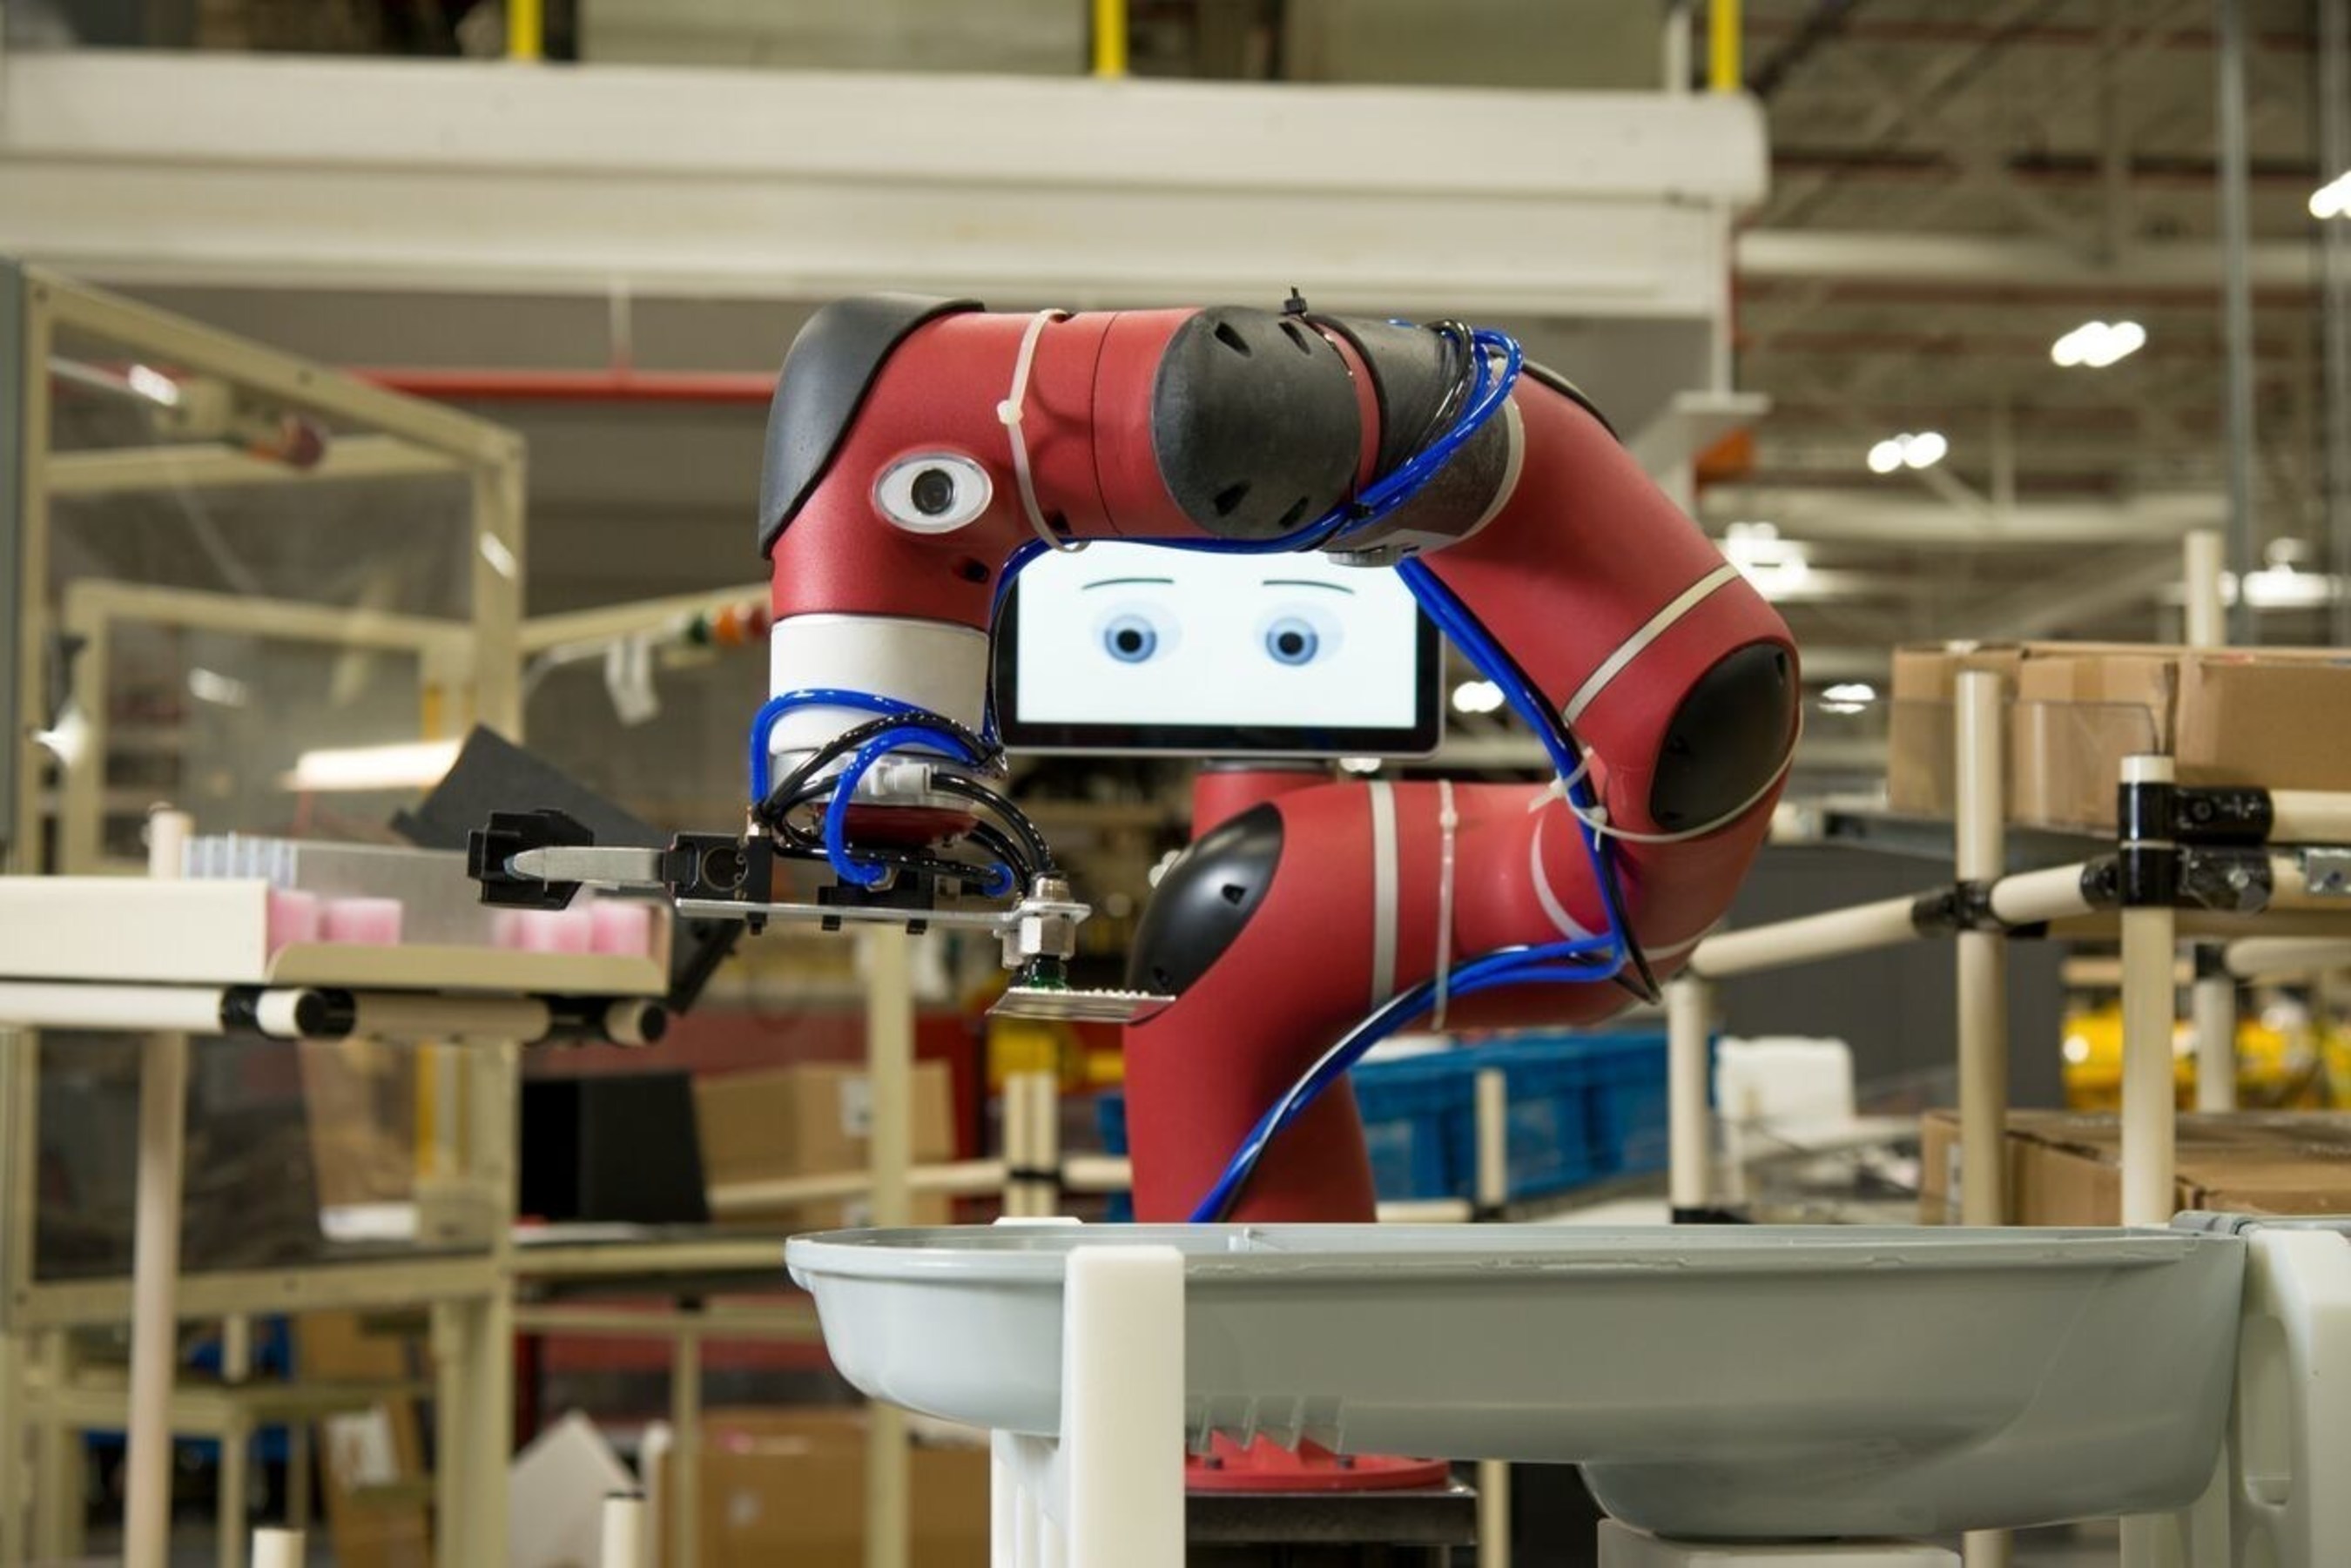 Rethink Robotics' Sawyer on the factory floor.